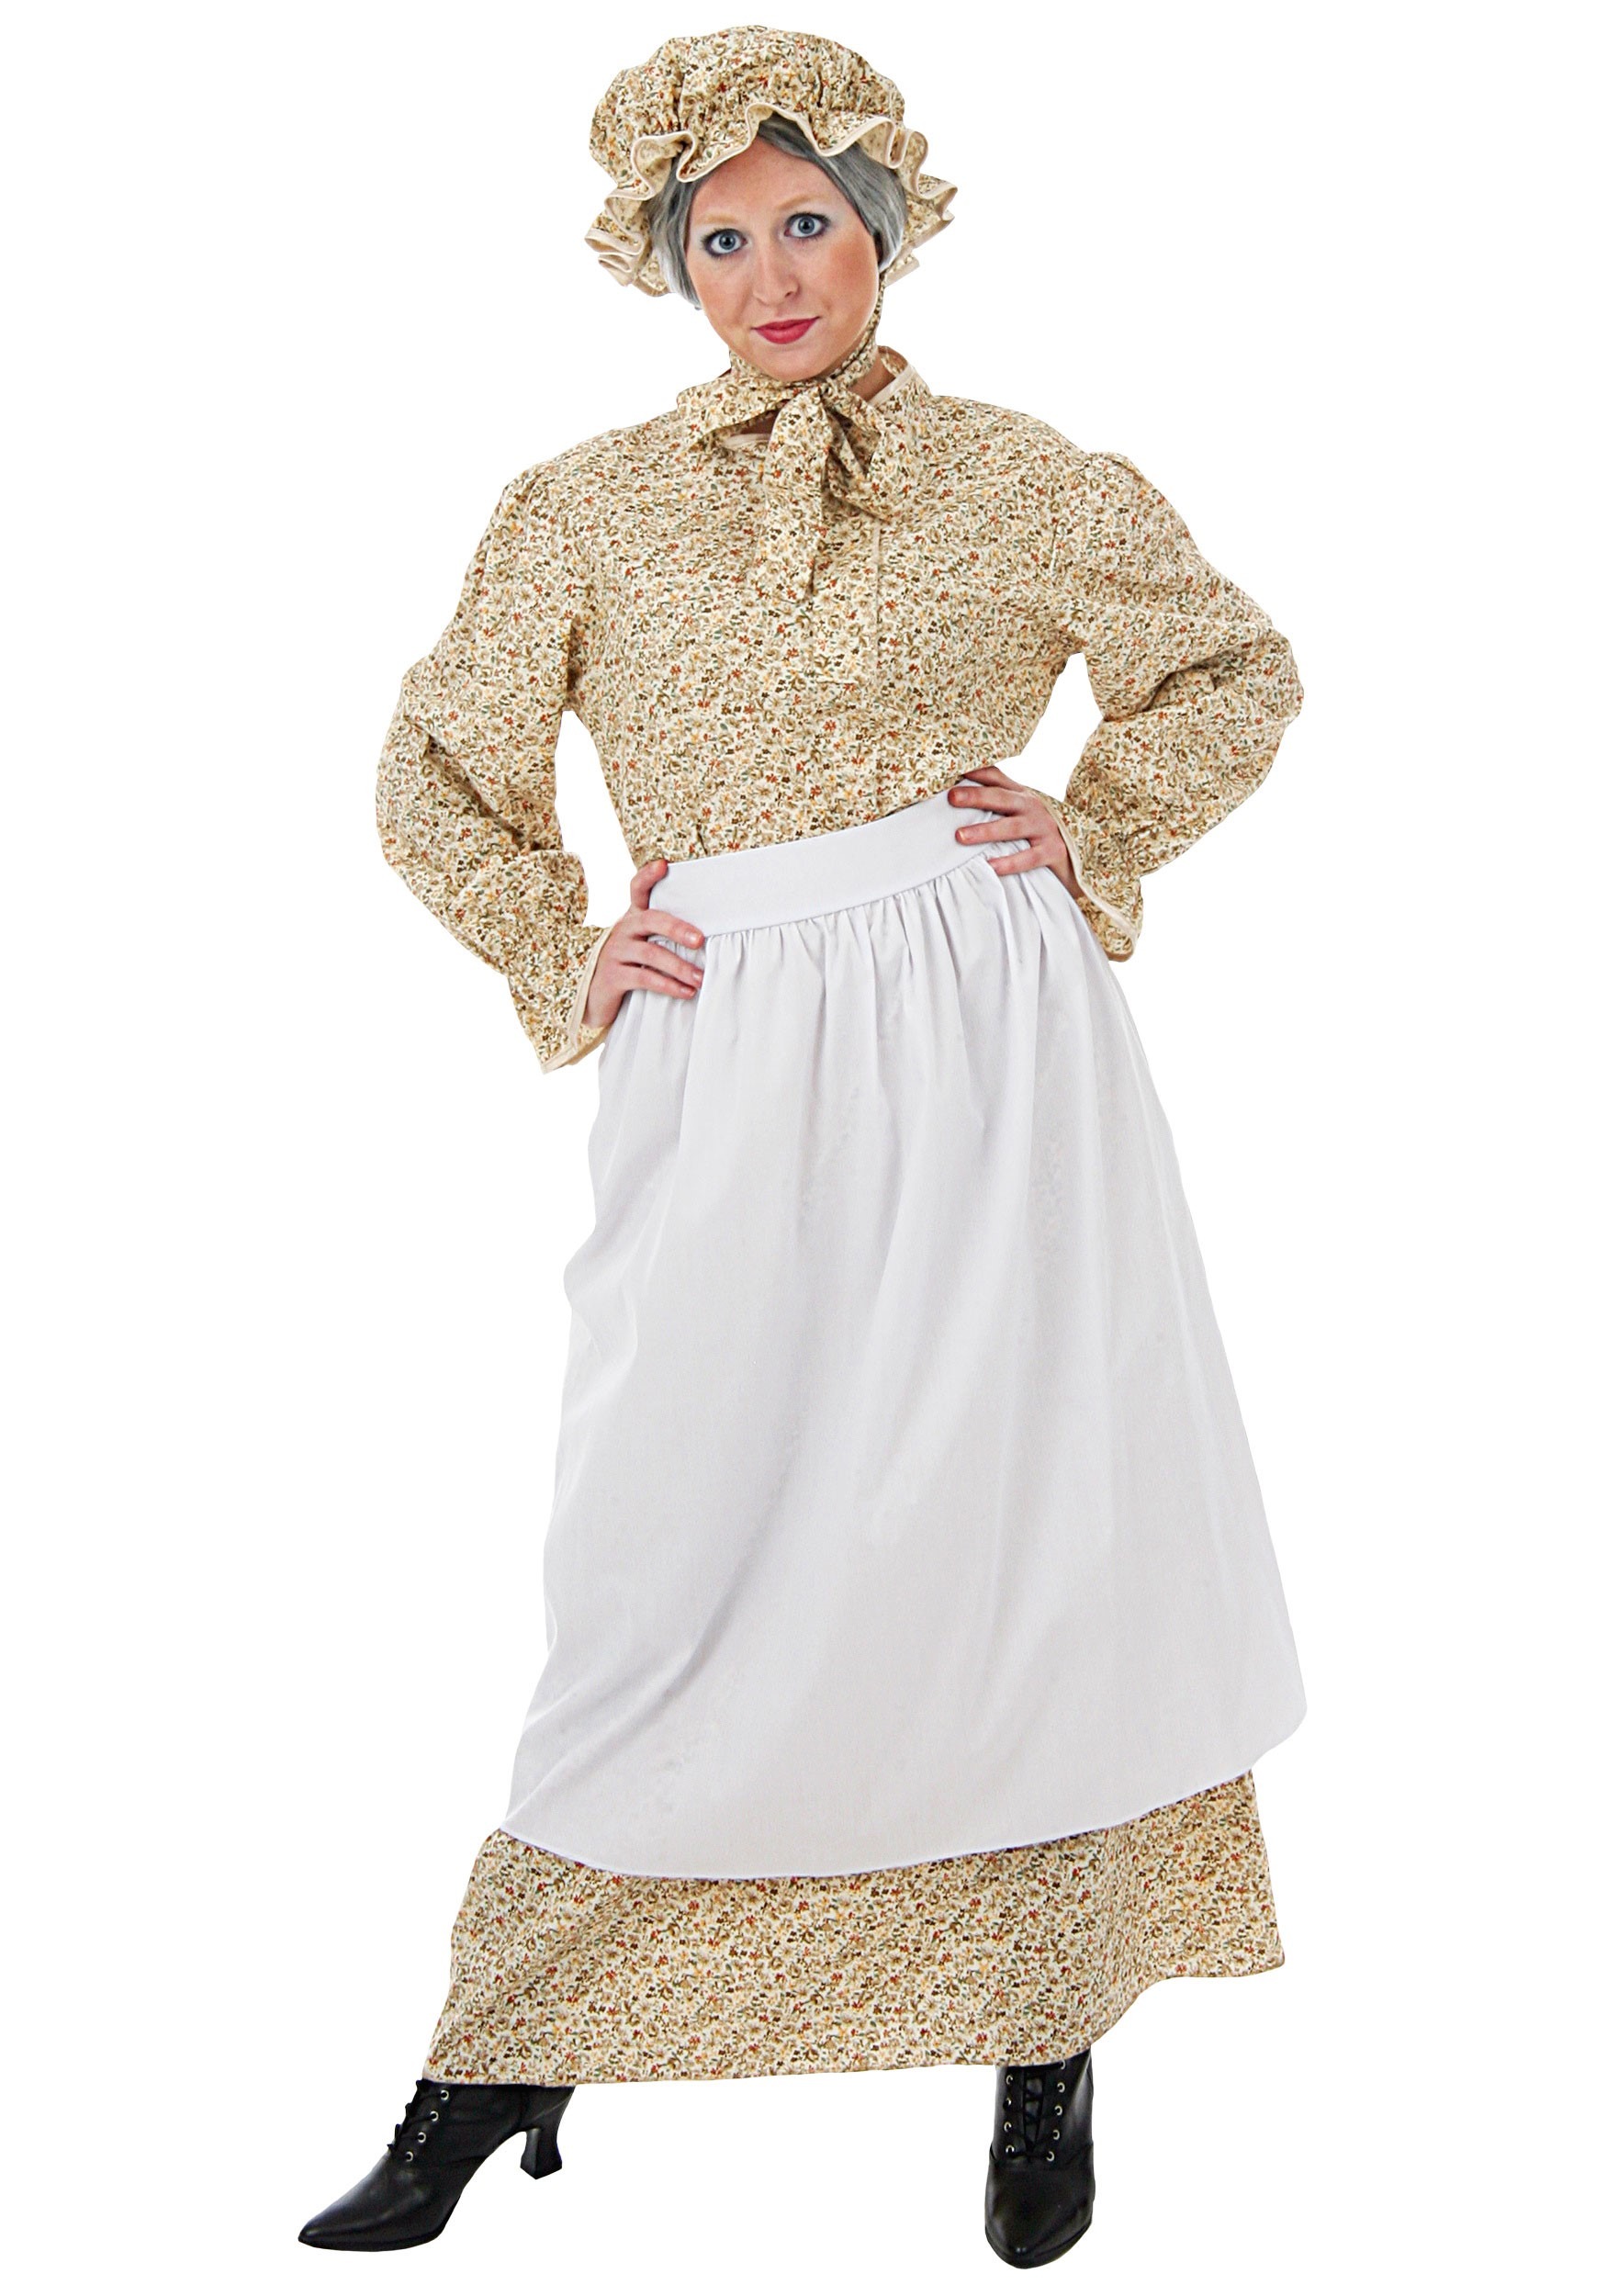 Photos - Fancy Dress Winsun Dress FUN Costumes Plus Size Women's Auntie Em Costume Dress Beige/White FUN 